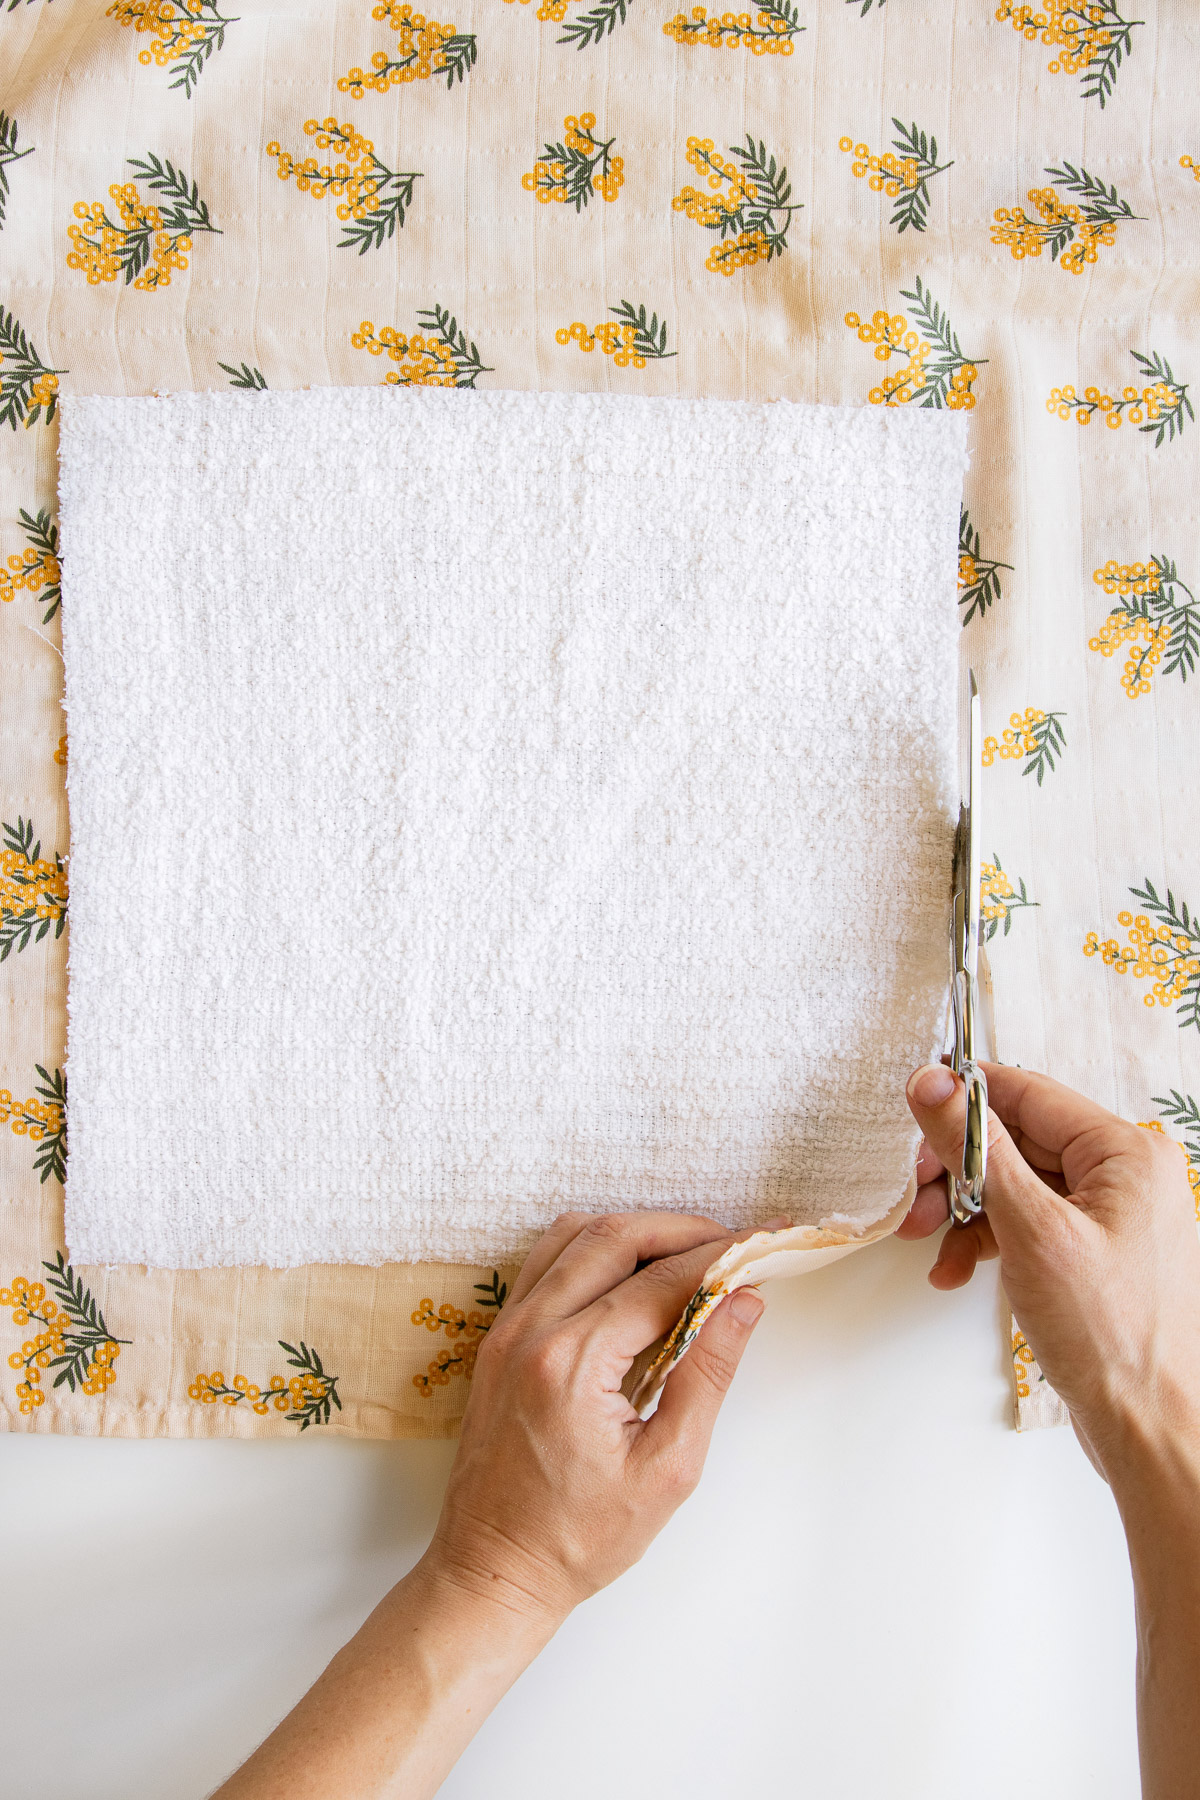 how to make unpaper towels